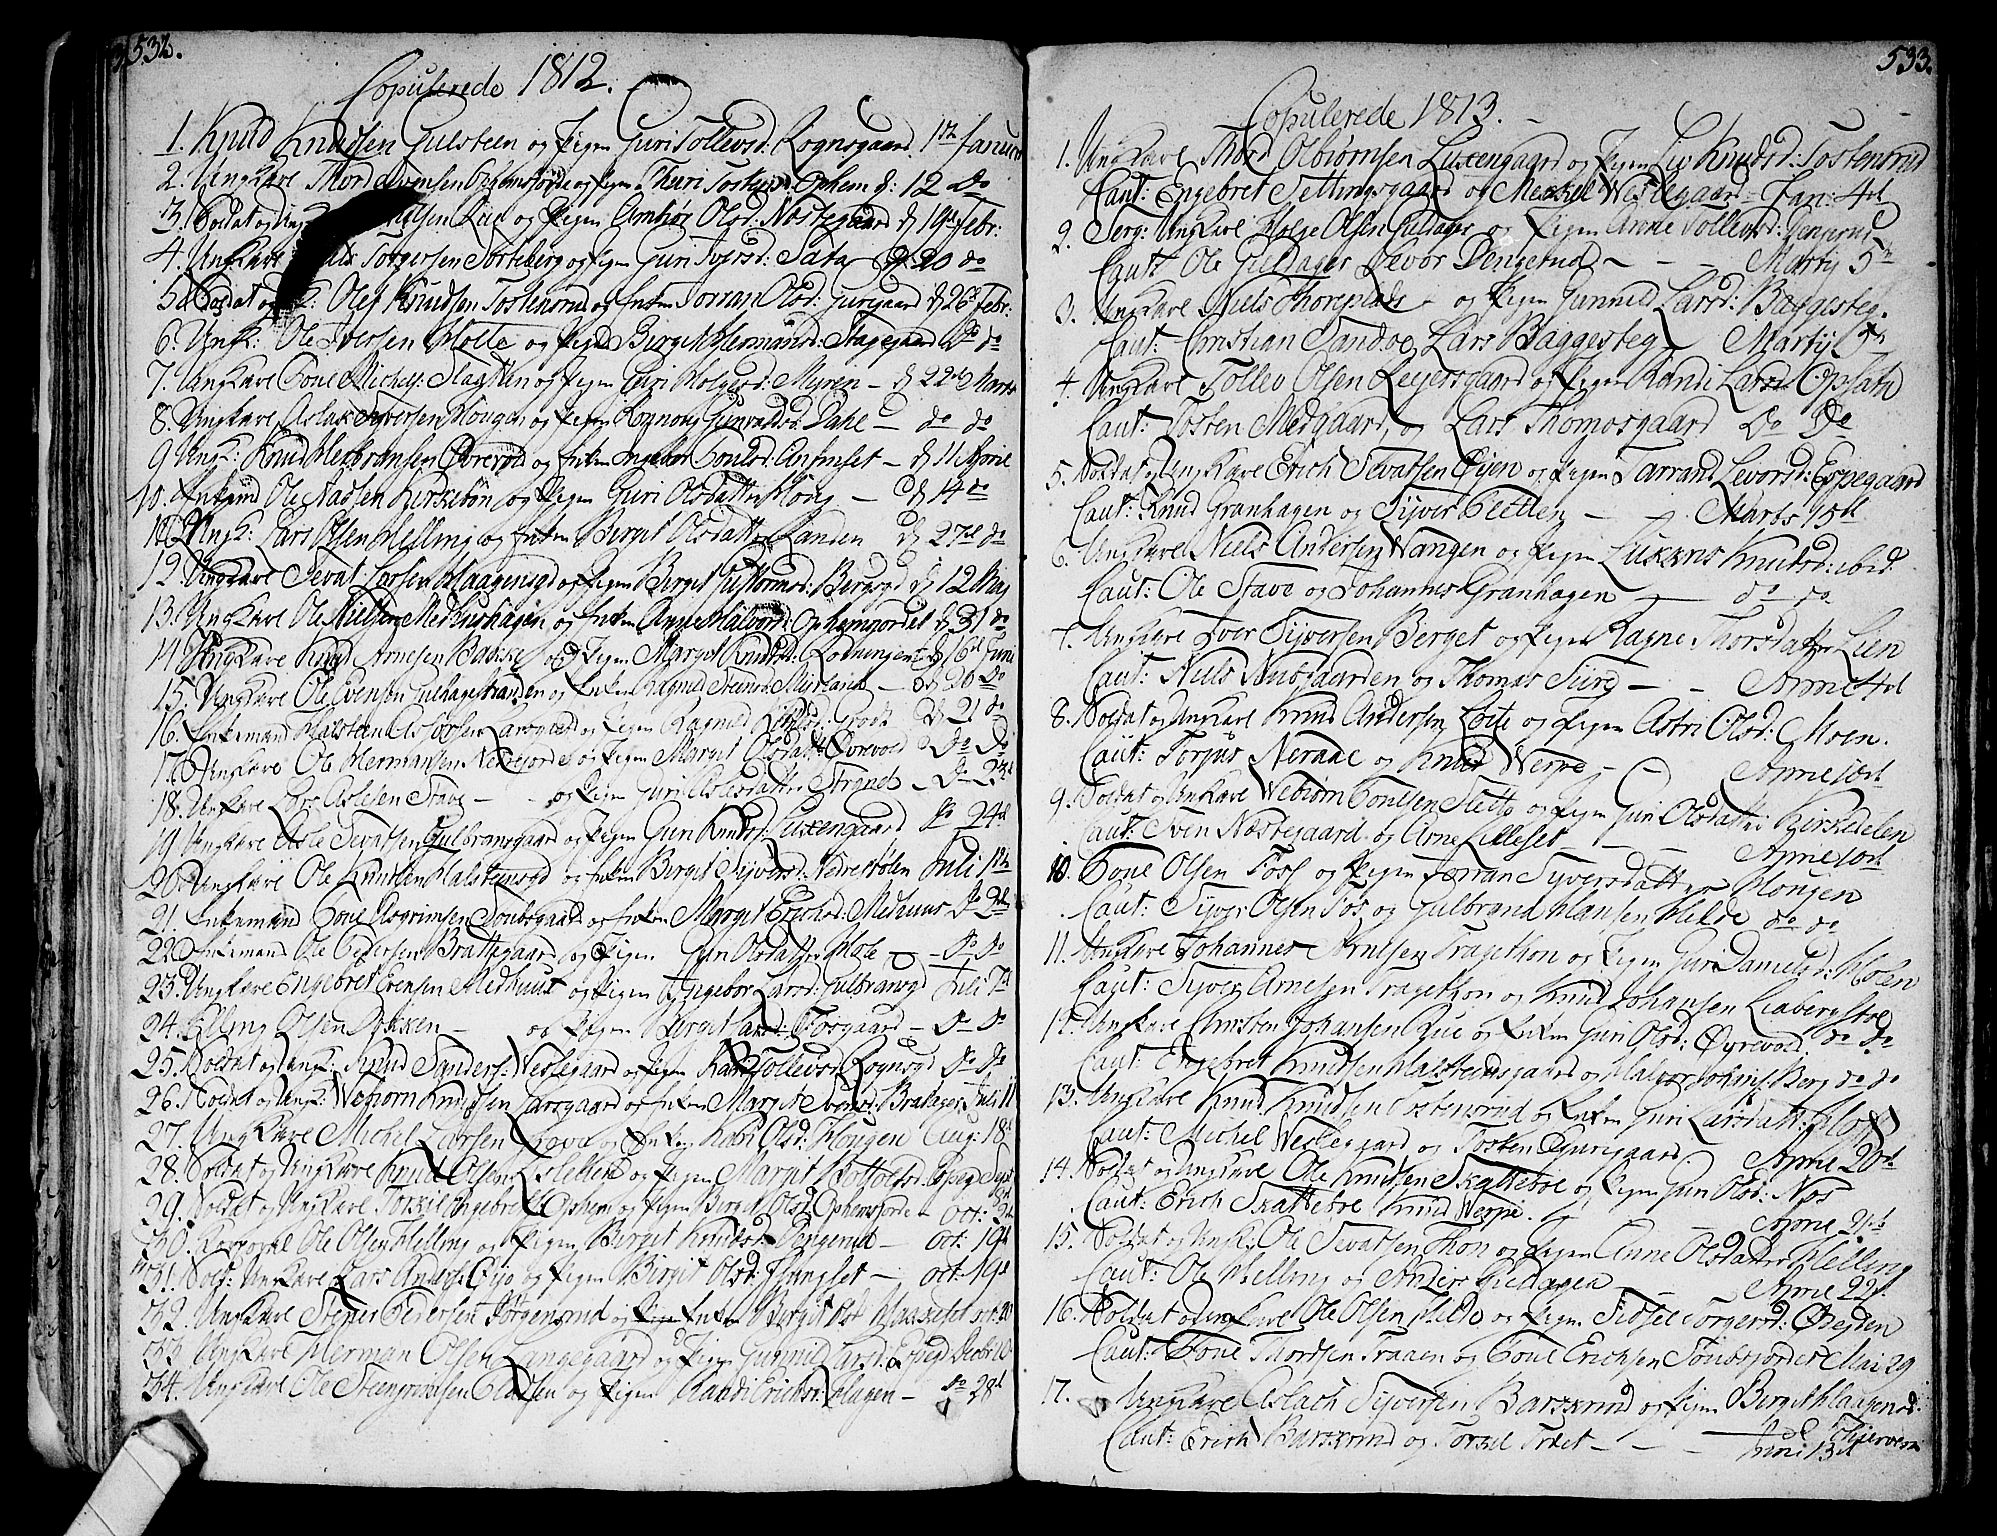 Parish Registry Sako Al Kirkeboker F Fa L0003 Parish Register Official No I 3 1807 1814 P 532 533 Scanned Archives The National Archives Of Norway